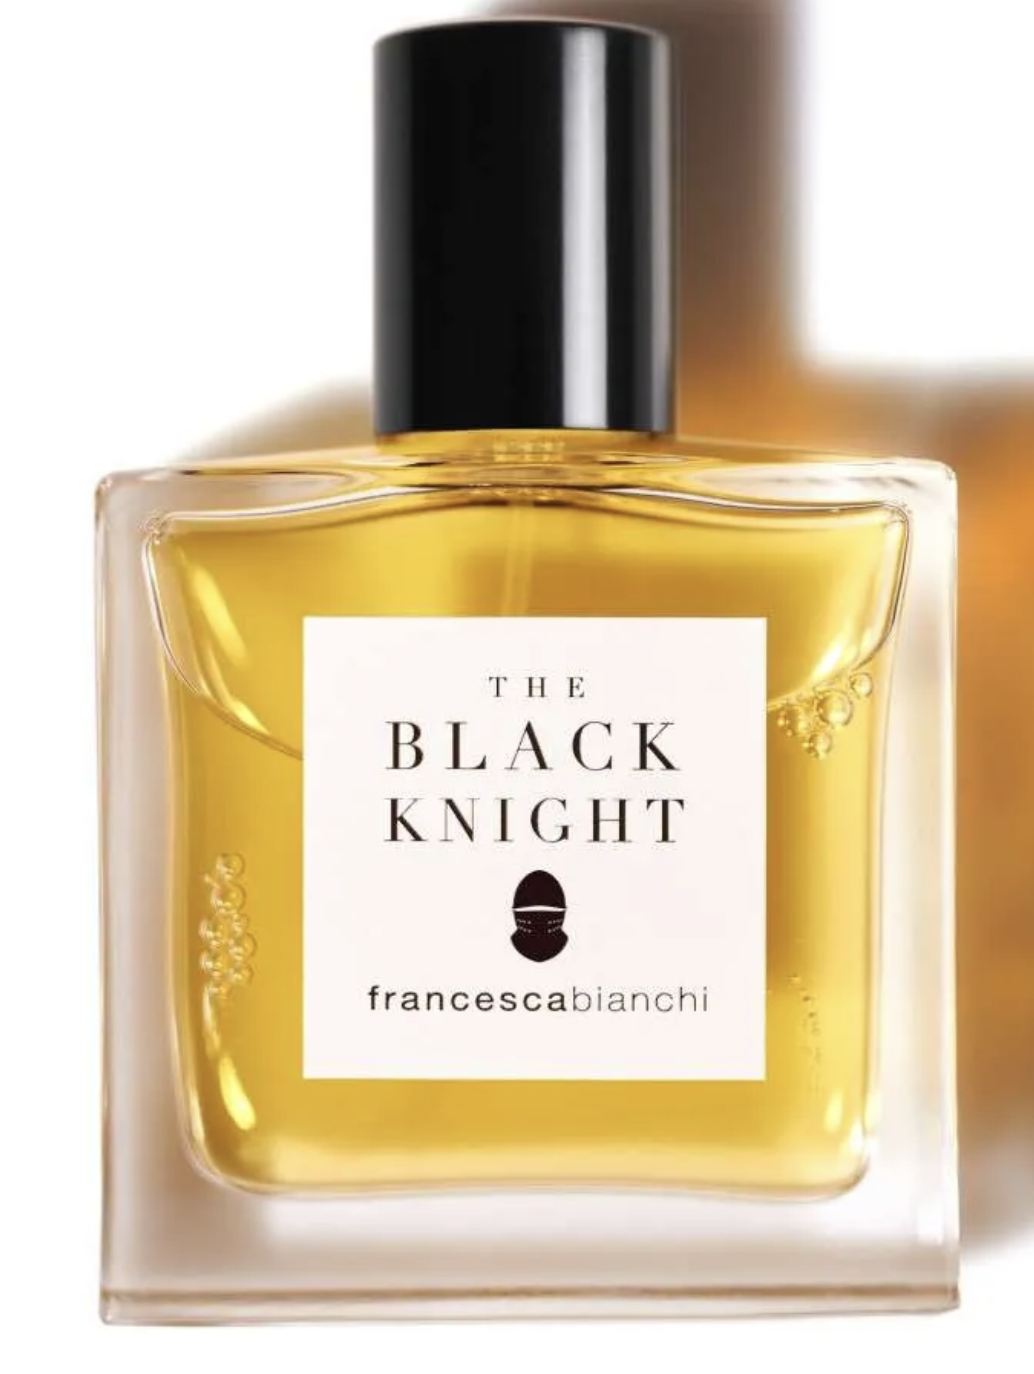 FRANCESCA BIANCHI THE BLACK KNIGHT EXTRAIT DE PARFUM 30ML SPRAY